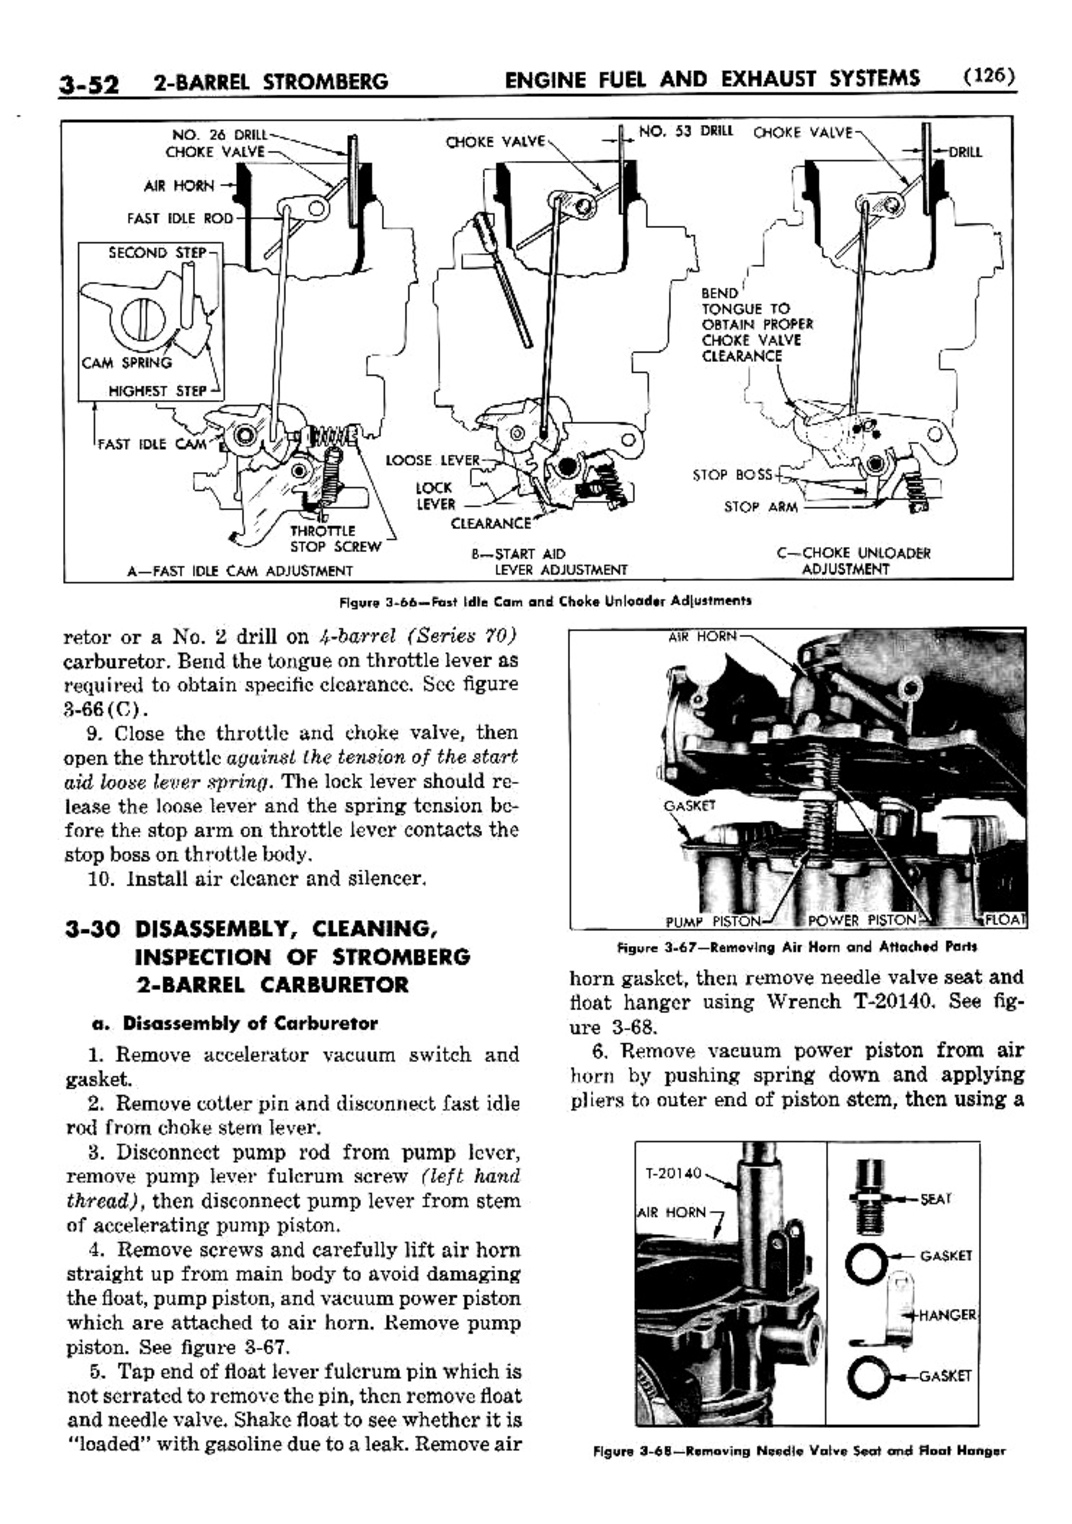 n_04 1952 Buick Shop Manual - Engine Fuel & Exhaust-052-052.jpg